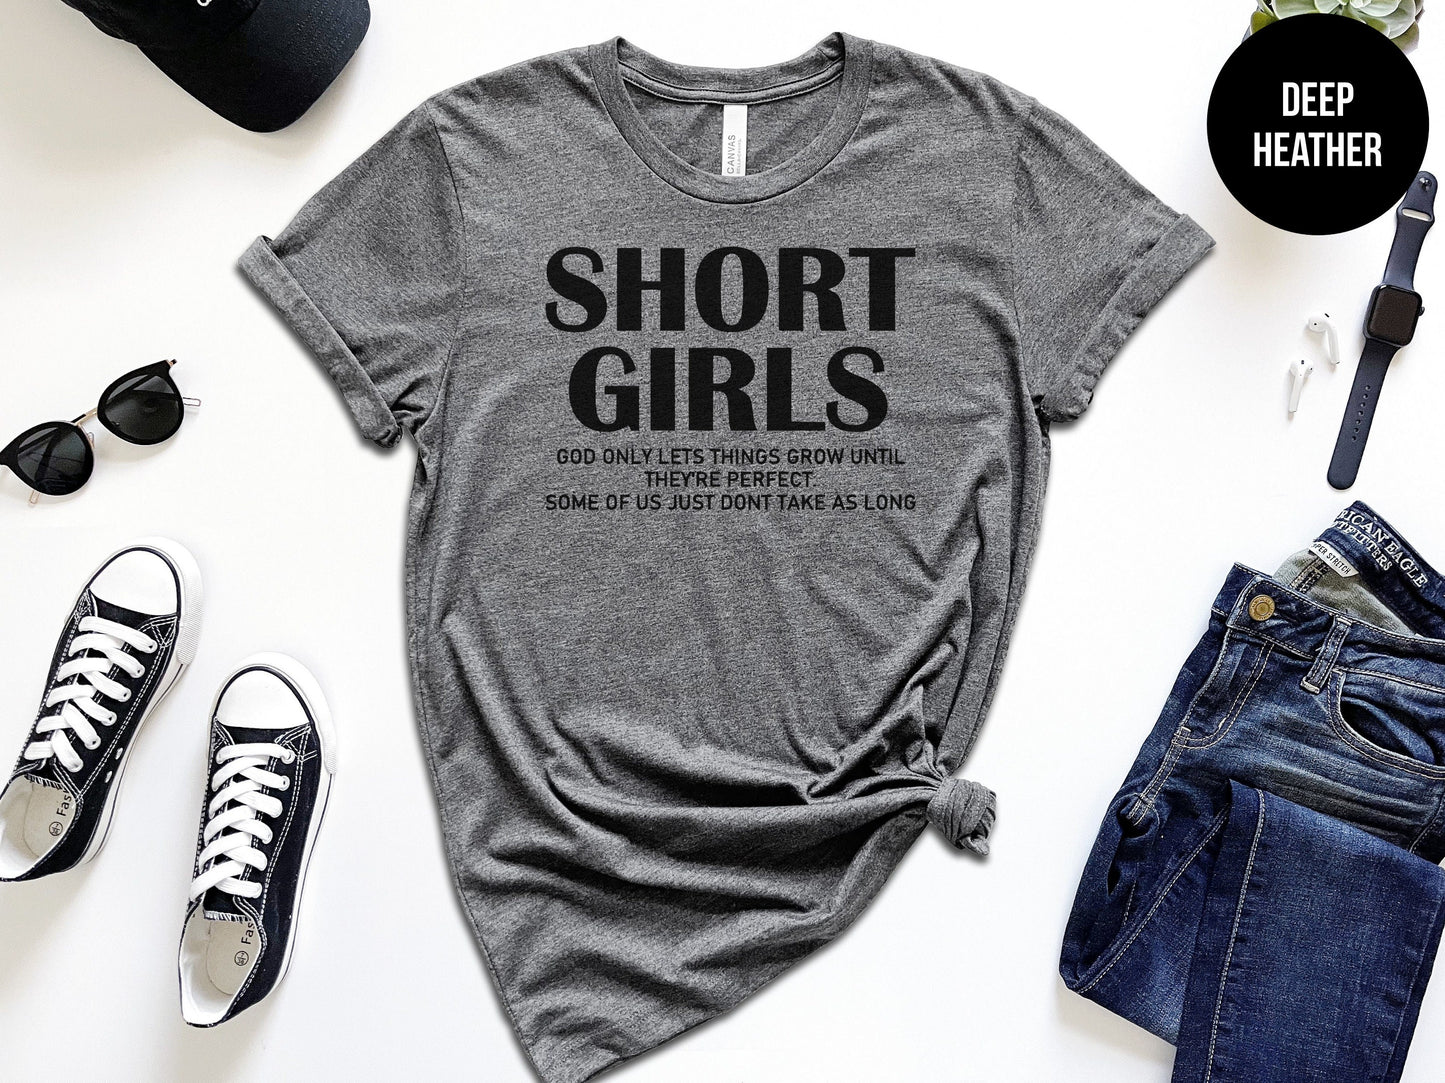 Short Girls